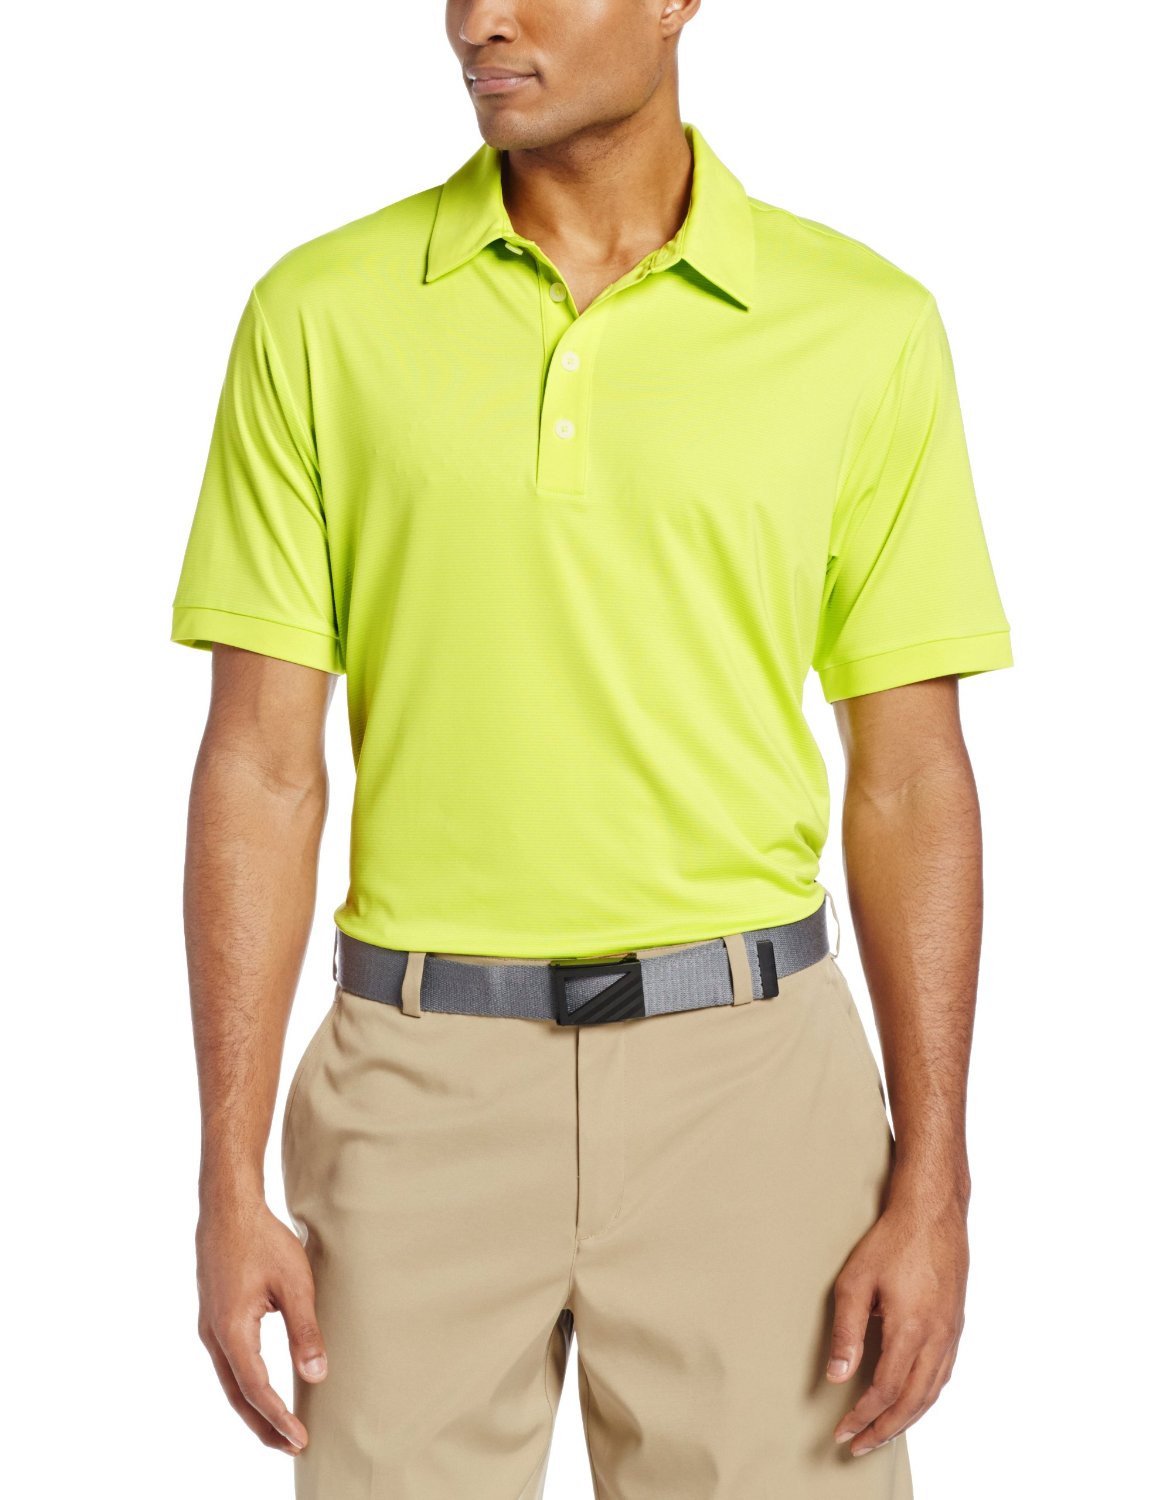 Adidas Mens Climalite Microstripe Golf Shirts